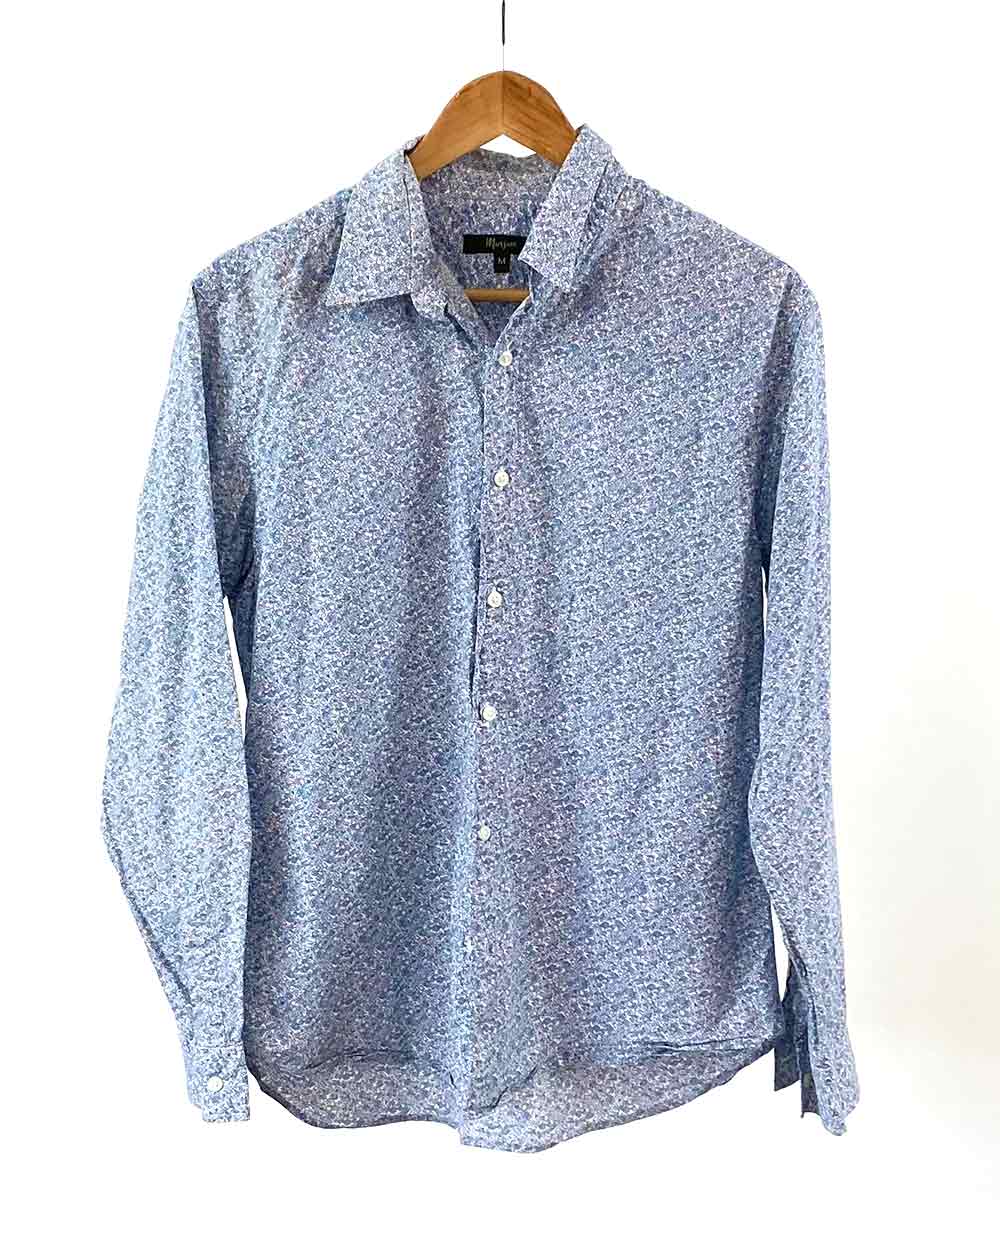 Monsoon Blue Patterned Shirt Medium